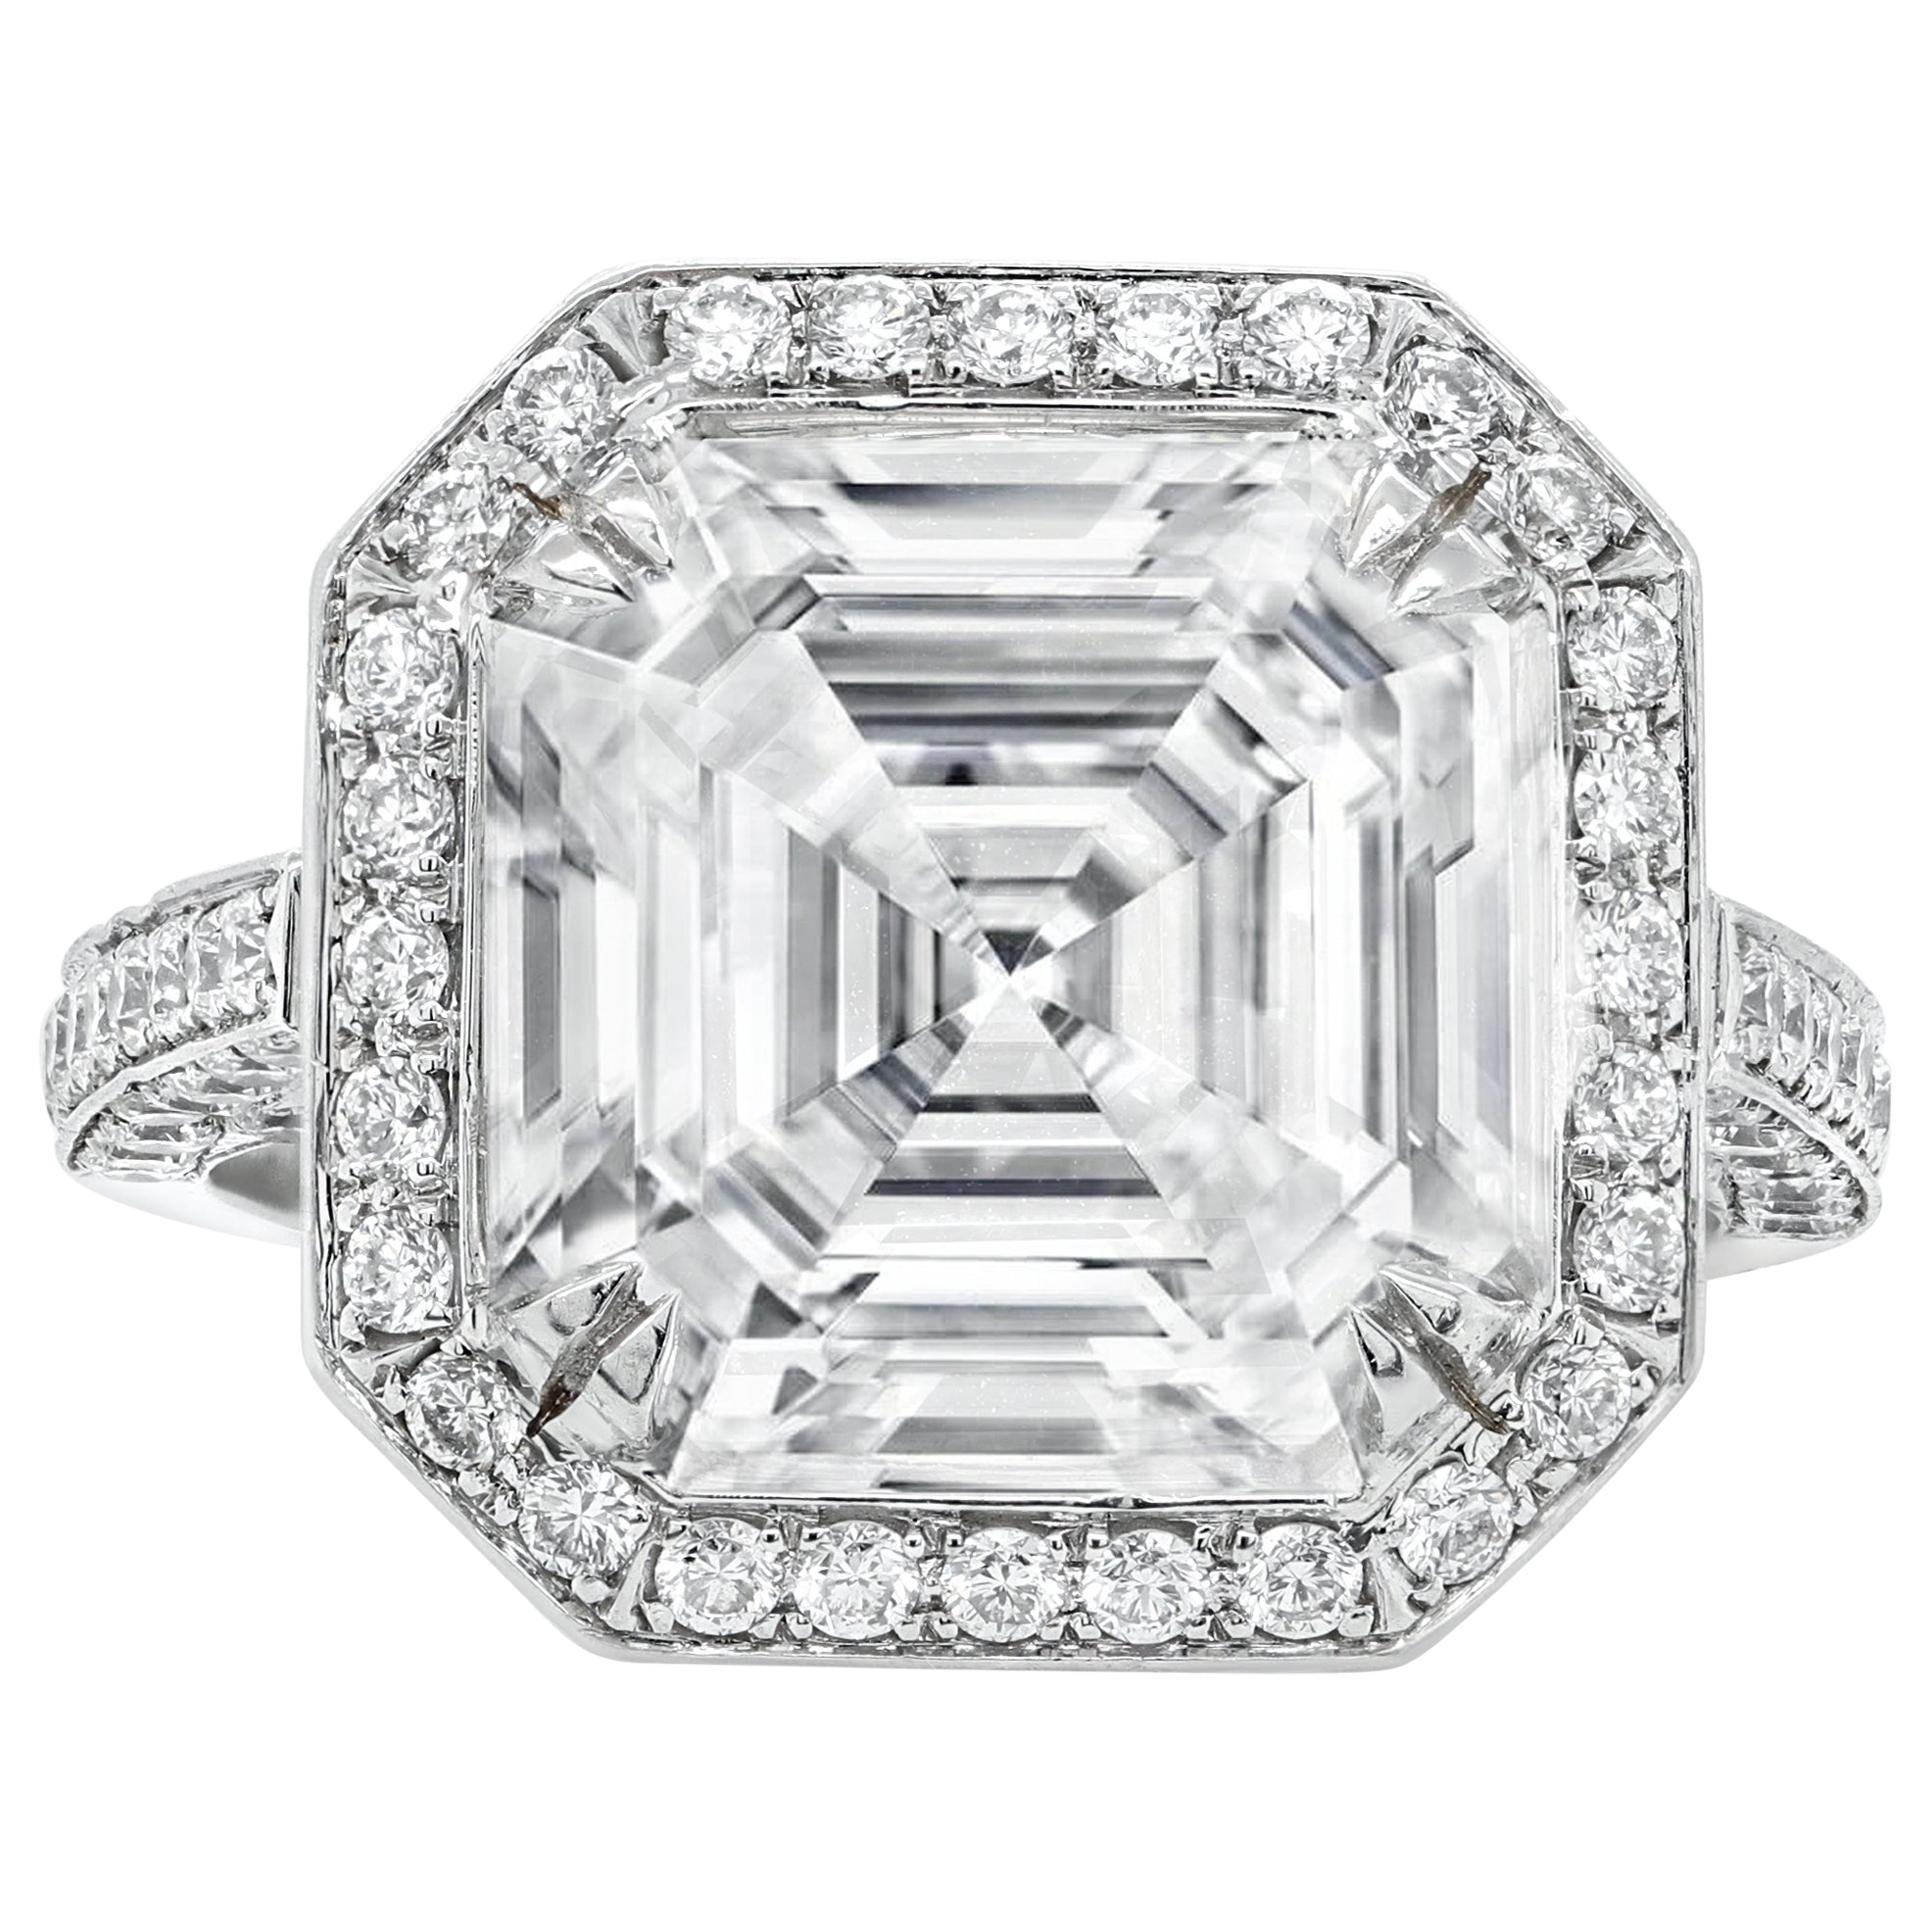 7.17 Carat Asscher Cut Diamond Ring in Platinum, GIA